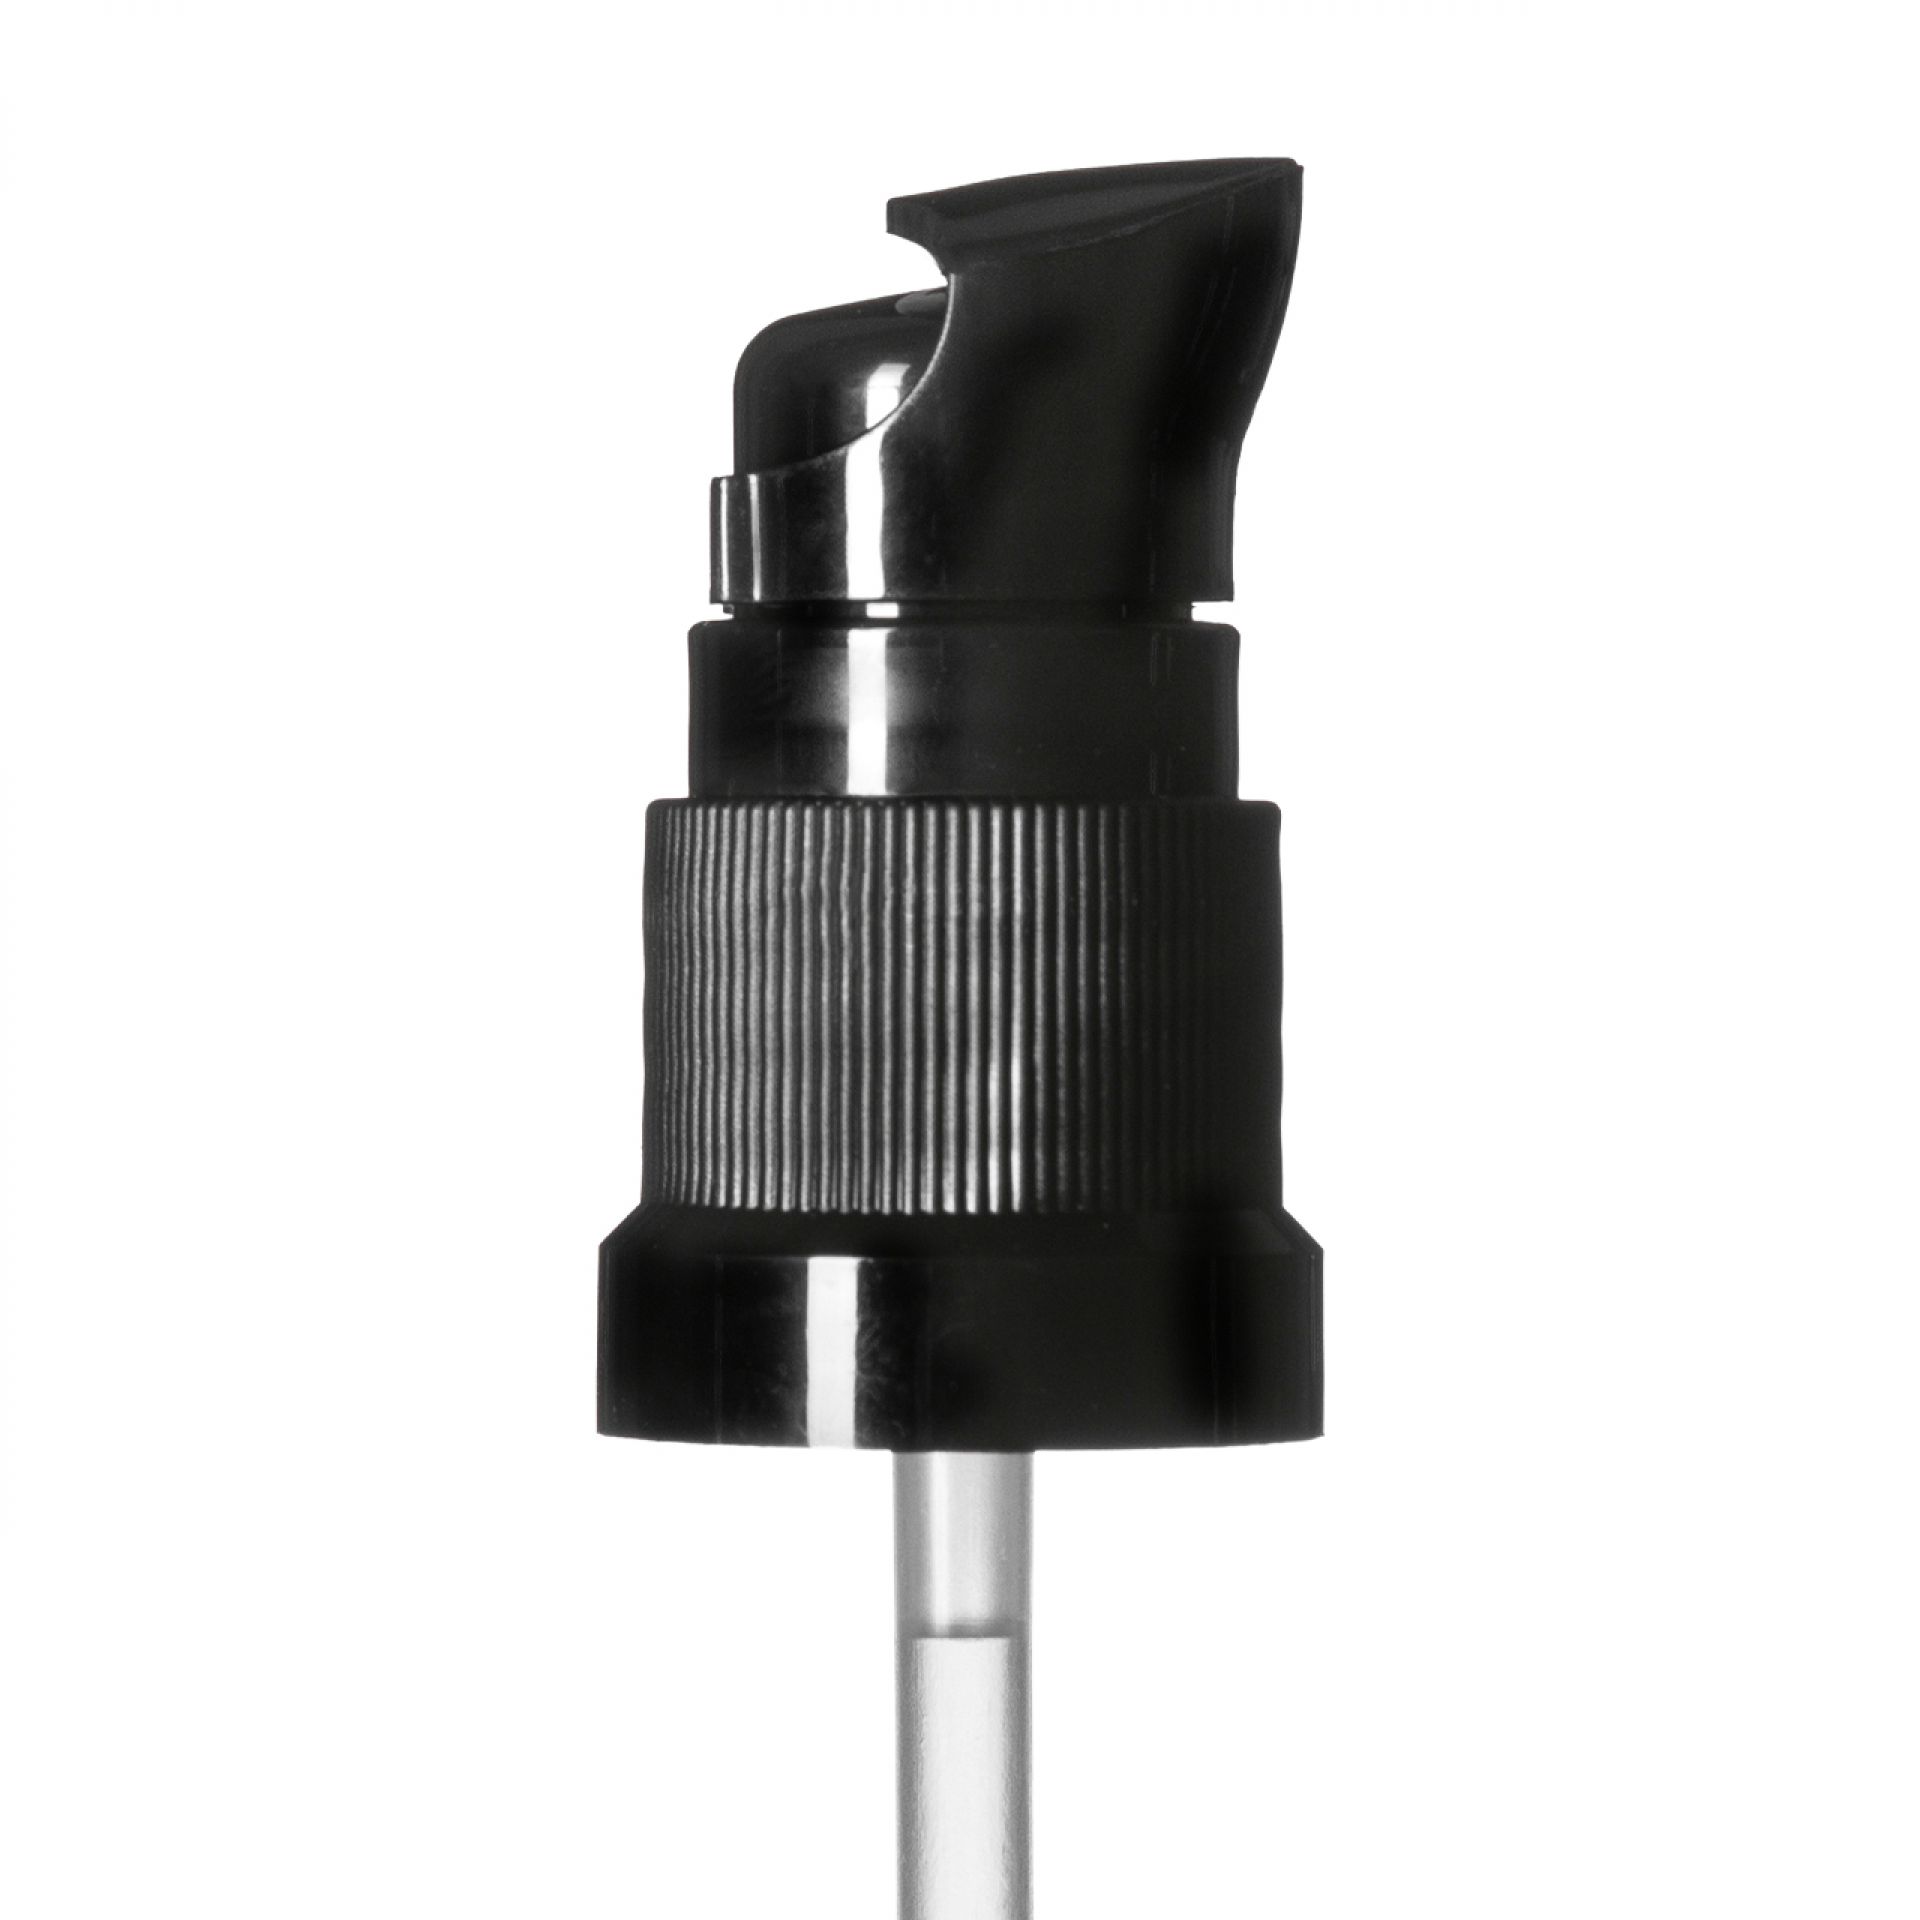 Lotion pump Metropolitan DIN18, PP, black, dose 0.14ml, black security clip (Orion 30)